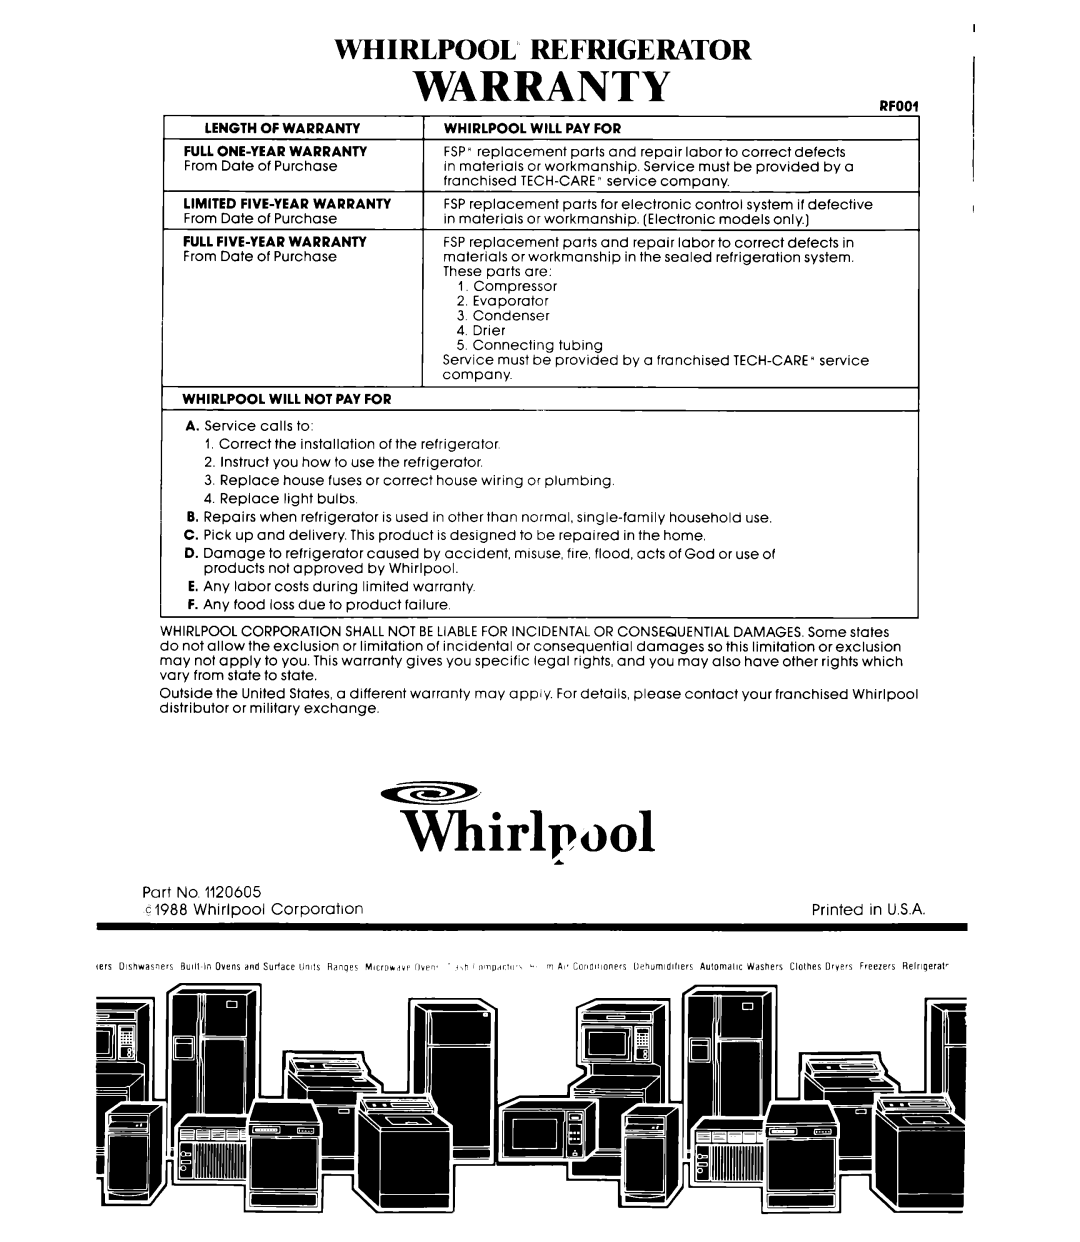 Whirlpool ET18HK, ETl8GK manual Whirlpool’ Refrigerator, WARRANTYaenn 